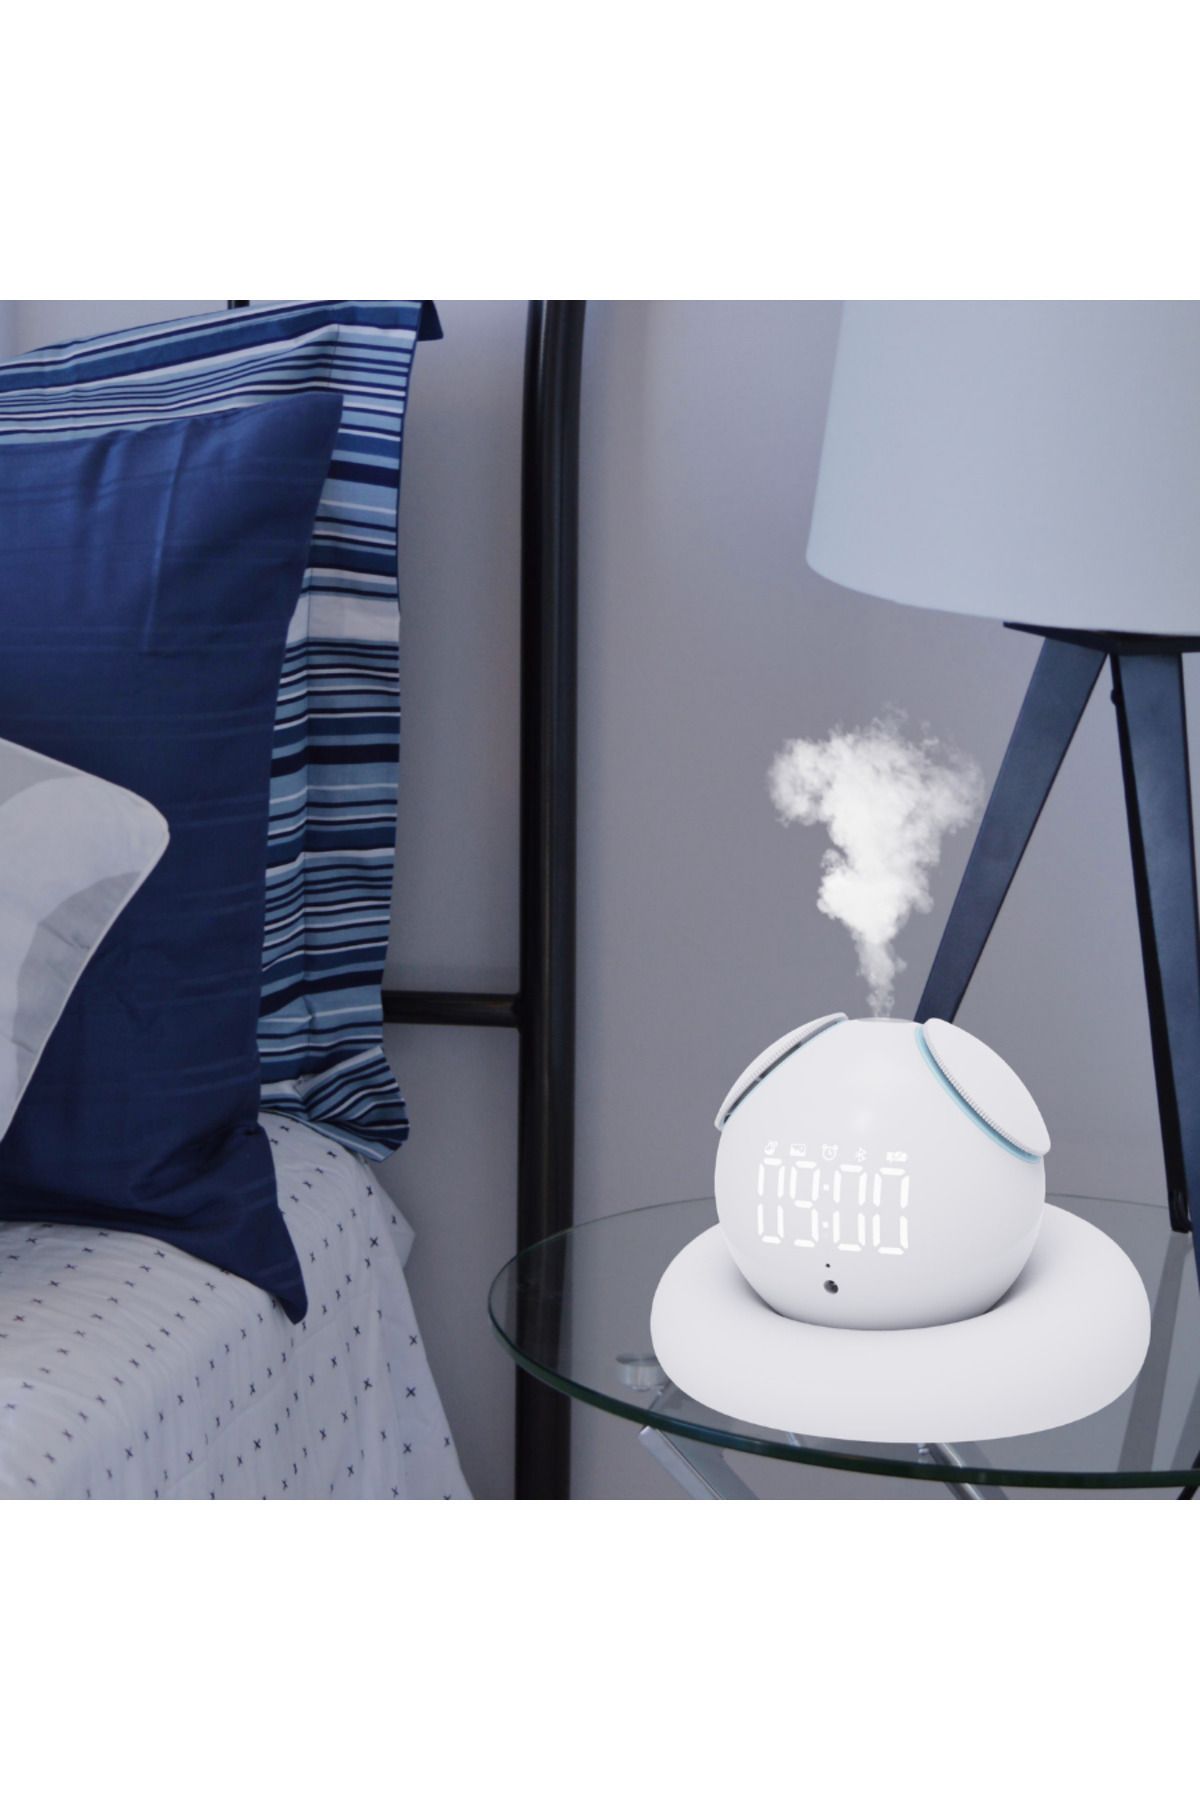 Stobom Mini Akıllı Uyku Robotu Aromaterapi Ve Bluetooth Hoparlör (İKİ ADET KOKU HEDİYE)